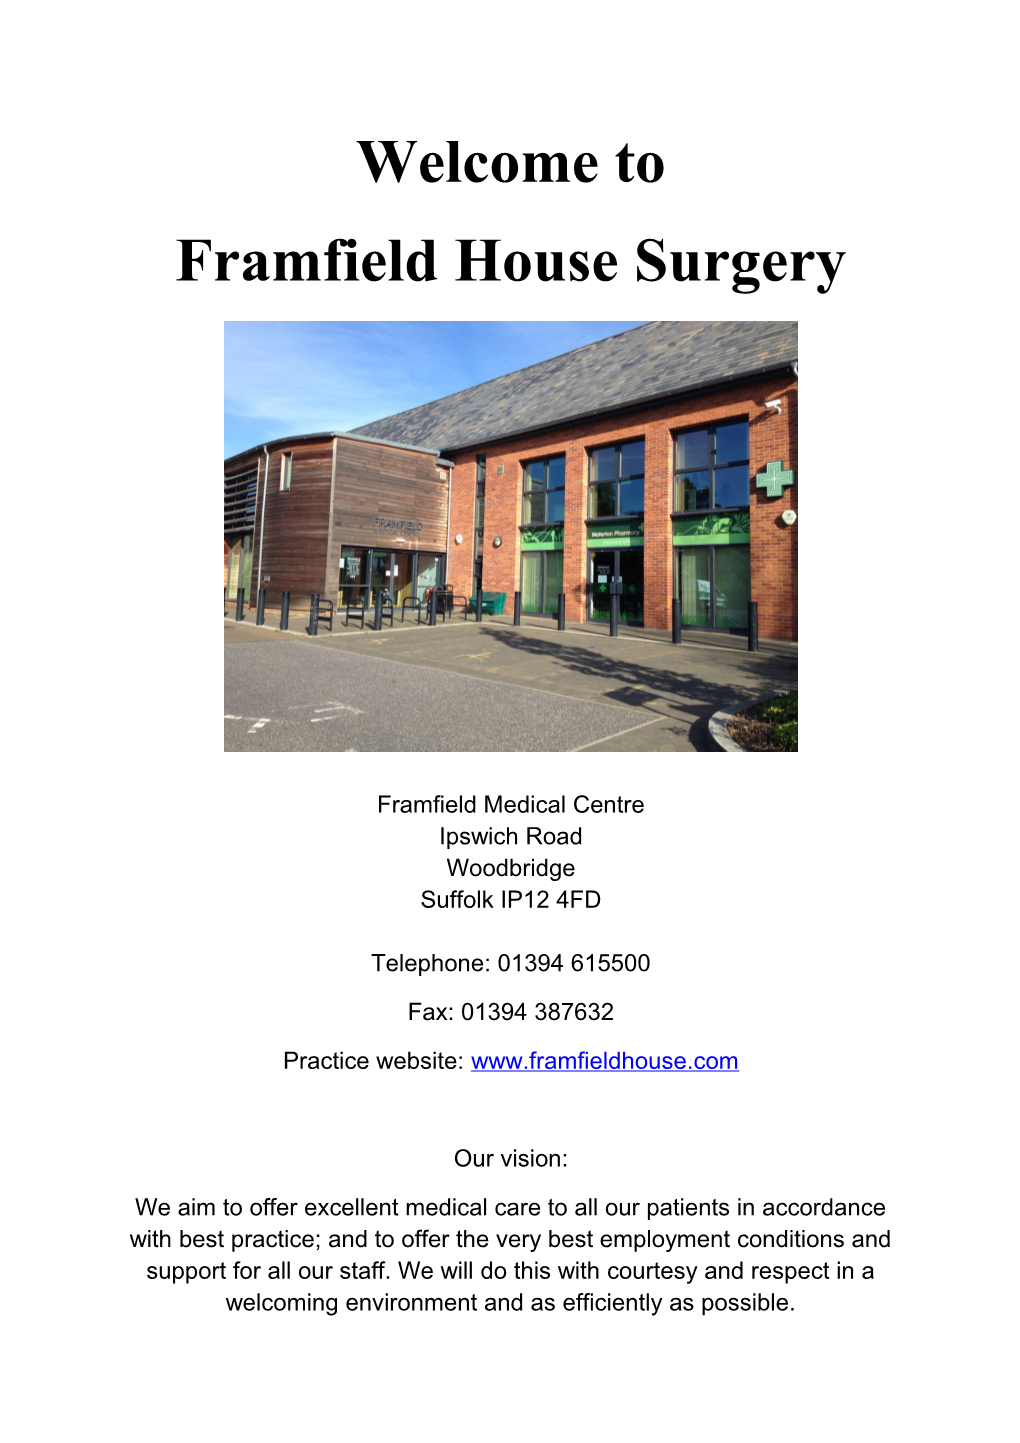 Framfield House Surgery